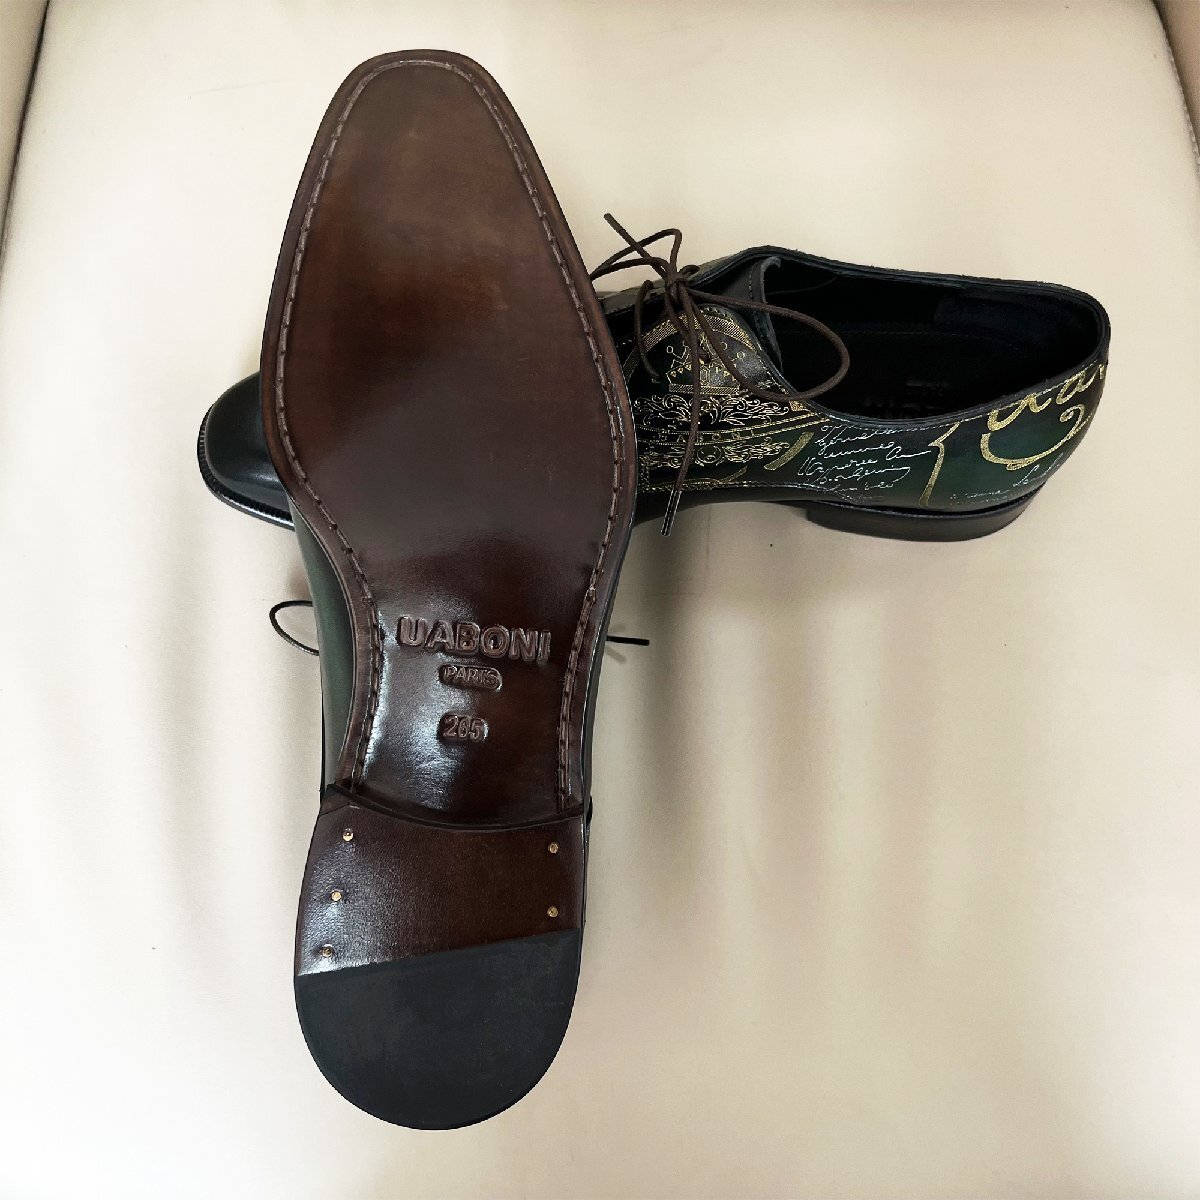  rare EU made regular price 28 ten thousand special order limited goods *UABONI* business shoes *yuaboni* hand made handmade hand . leather original leather formal gentleman for 25.